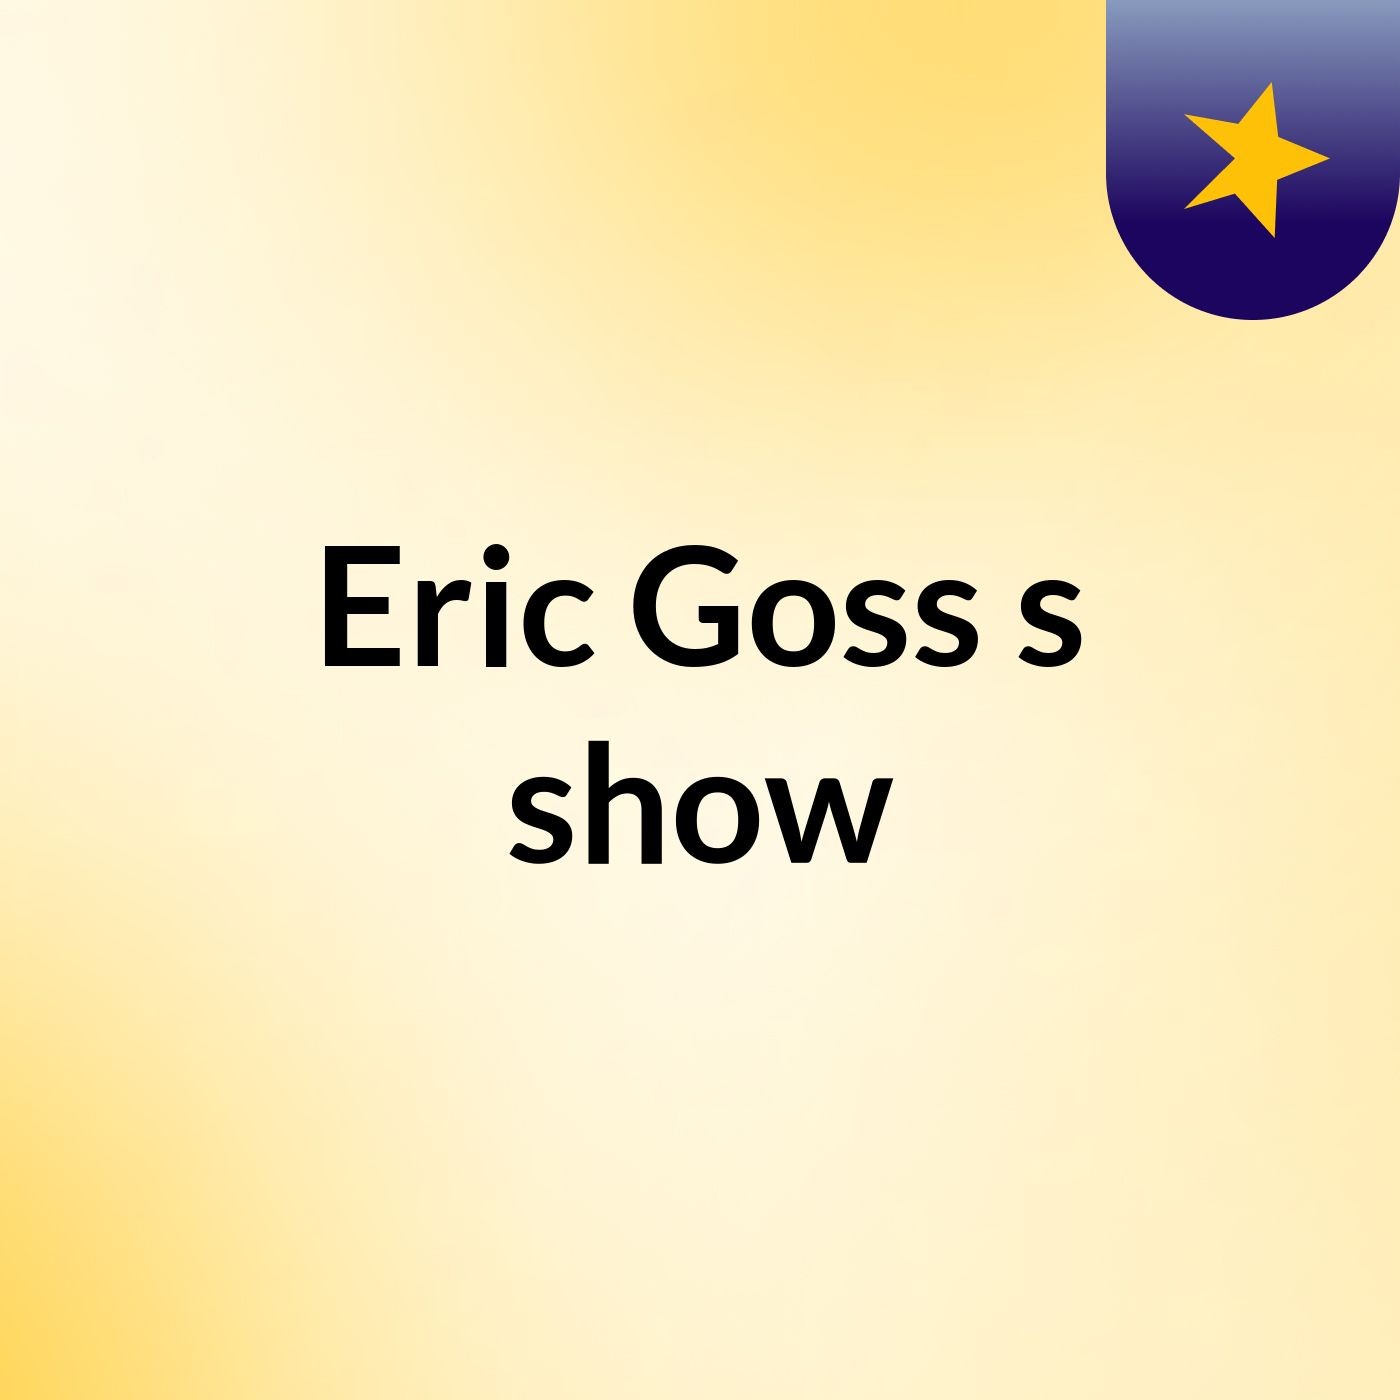 Eric Goss's show